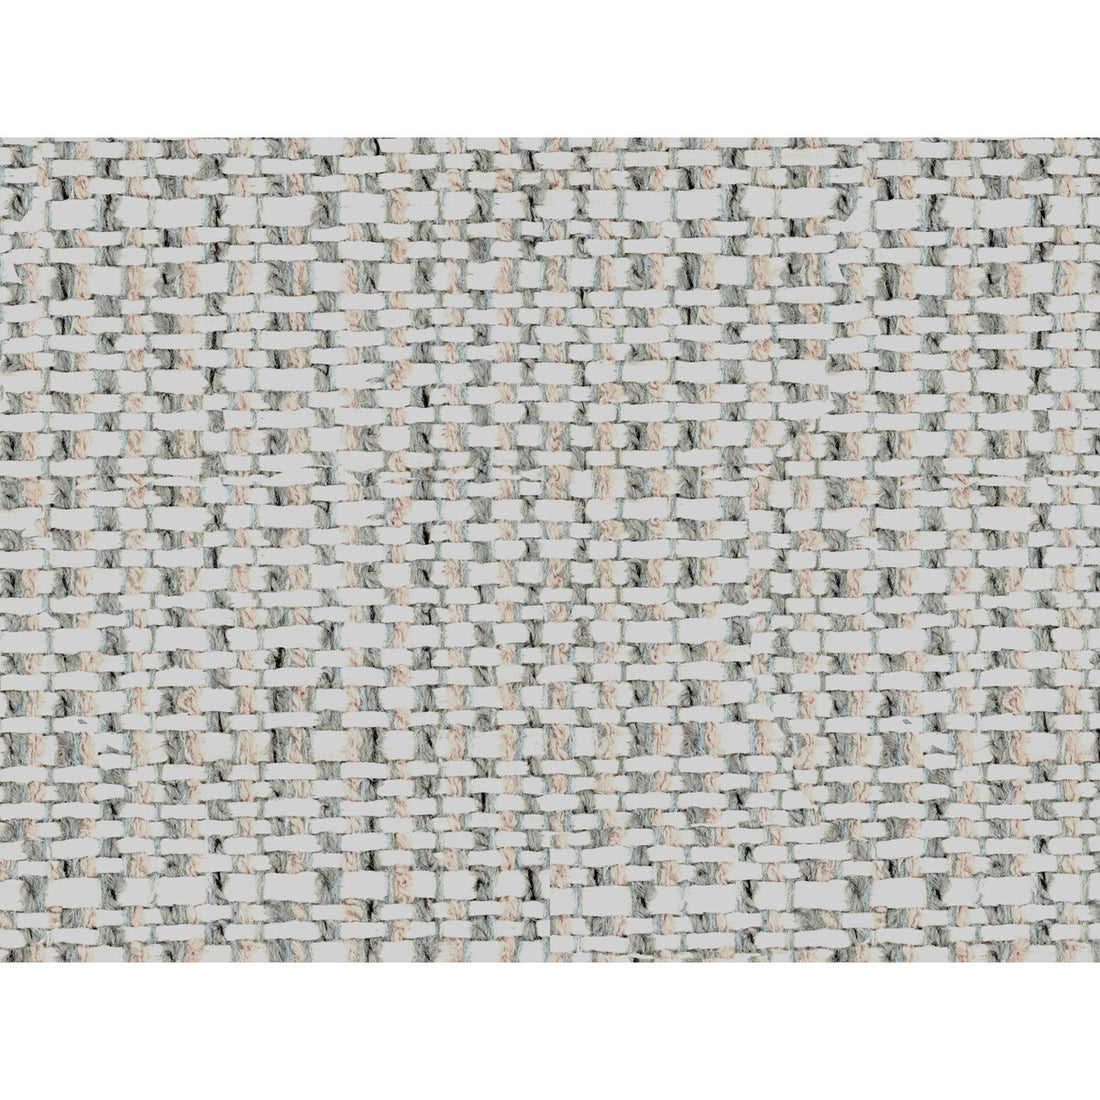 Kravet Smart fabric in 34323-1516 color - pattern 34323.1516.0 - by Kravet Smart